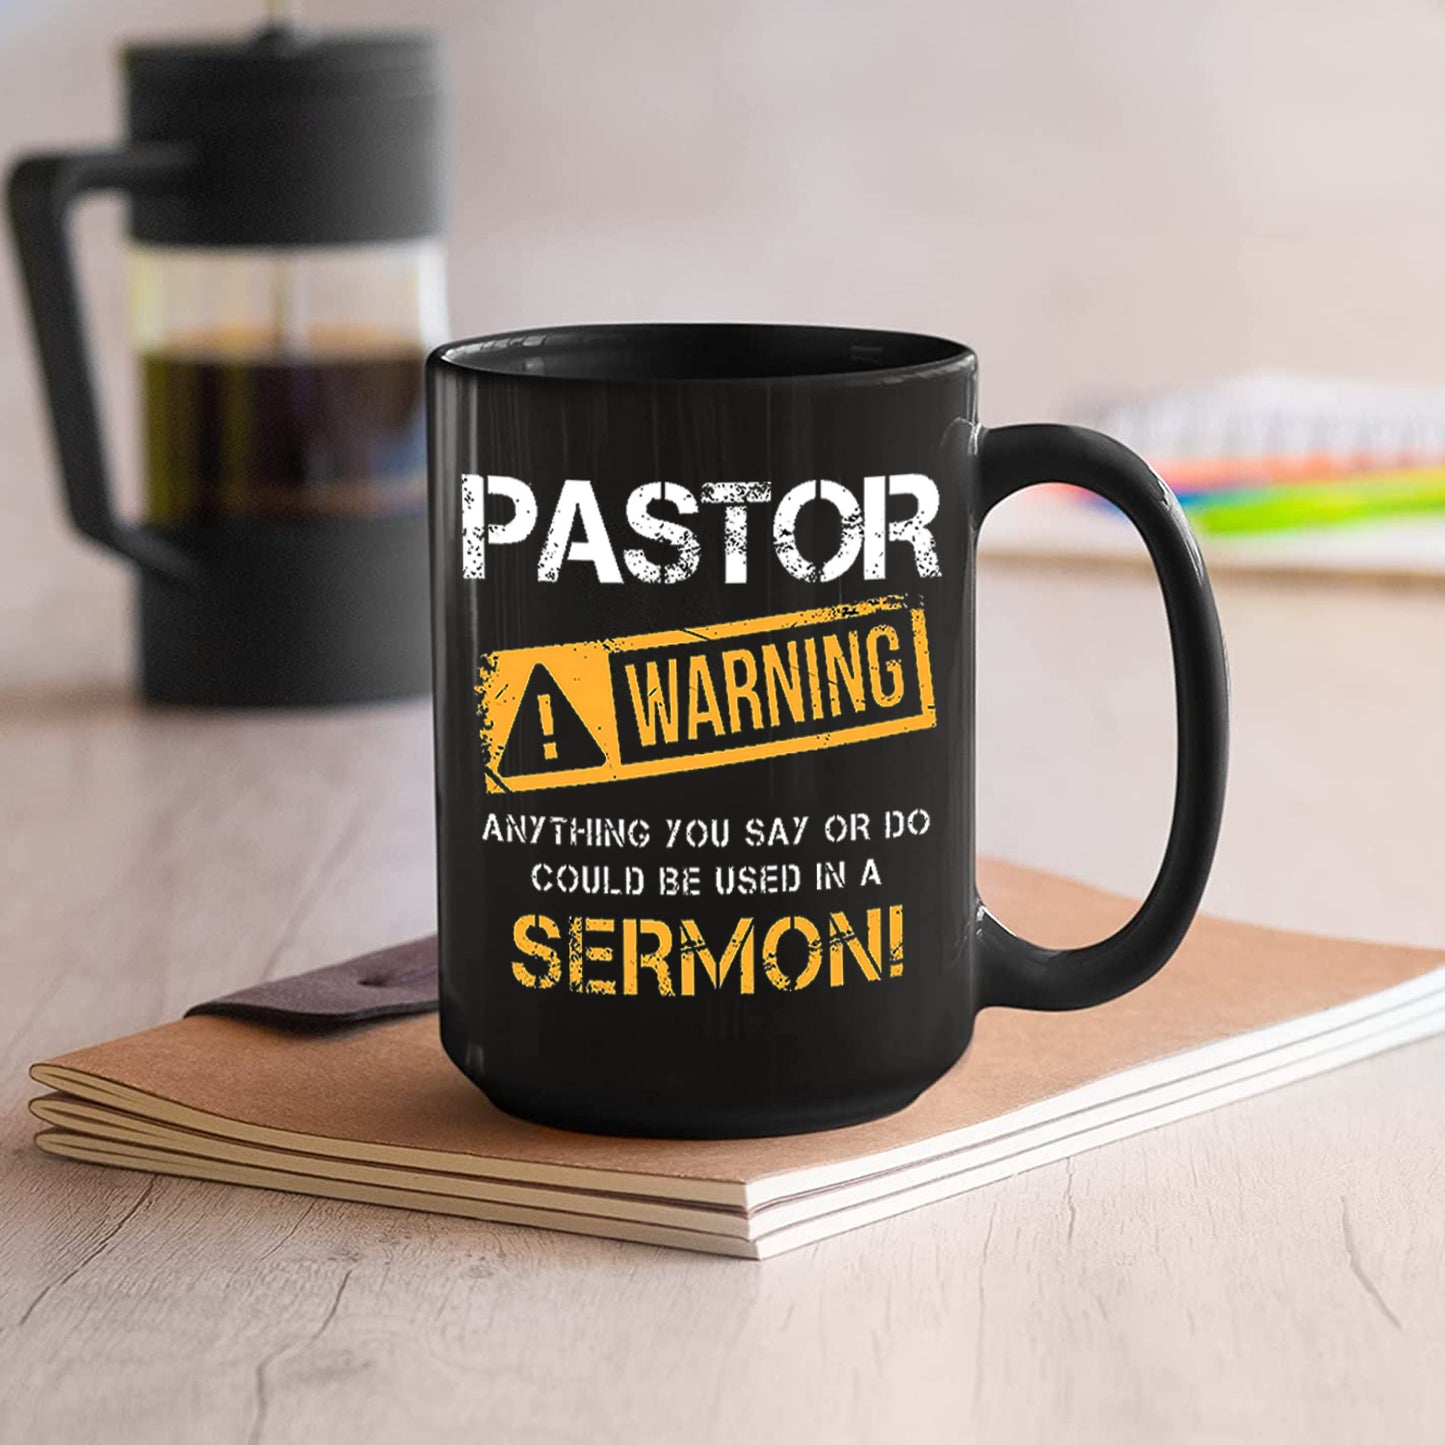 Pastor Warning: You Will Be Used In A Sermon Christian Black Ceramic Mug, 11oz claimedbygoddesigns